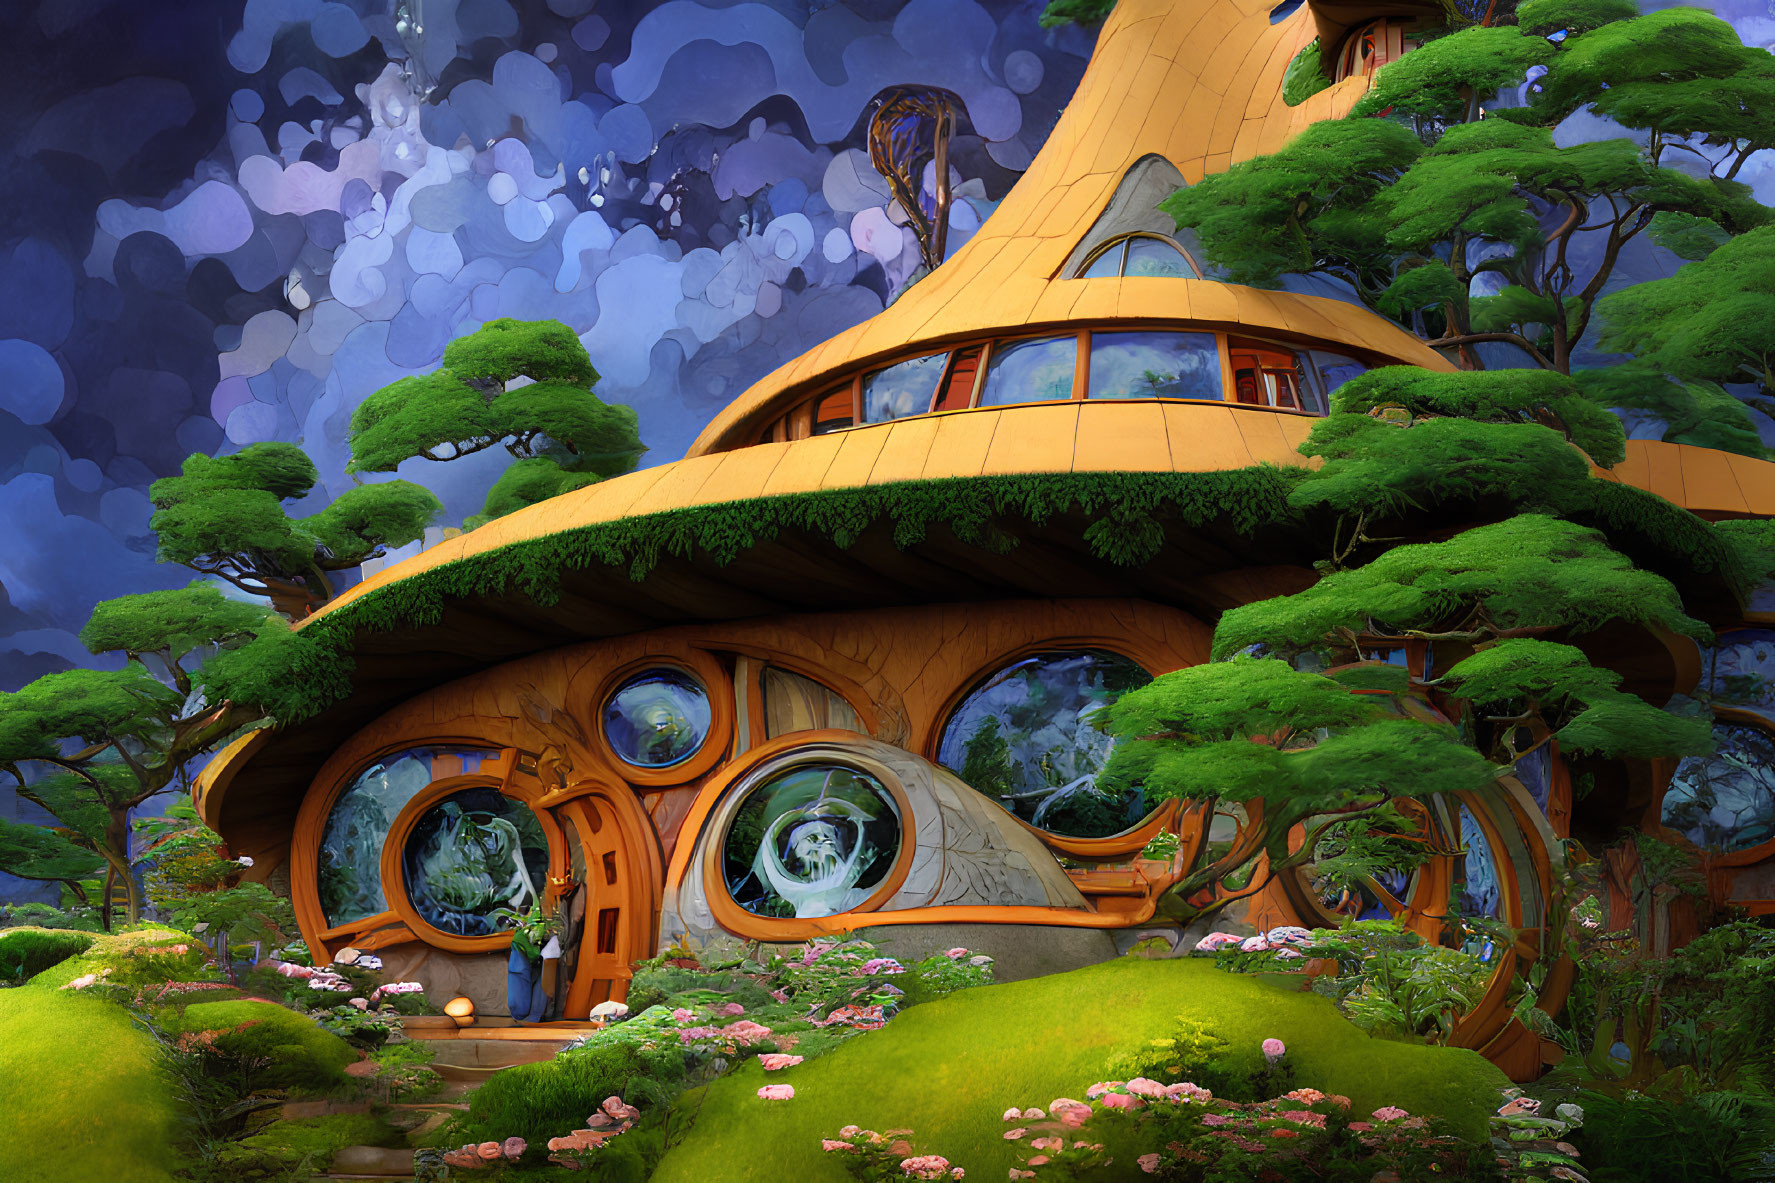 Circular Window Fantasy Treehouse in Lush Greenery